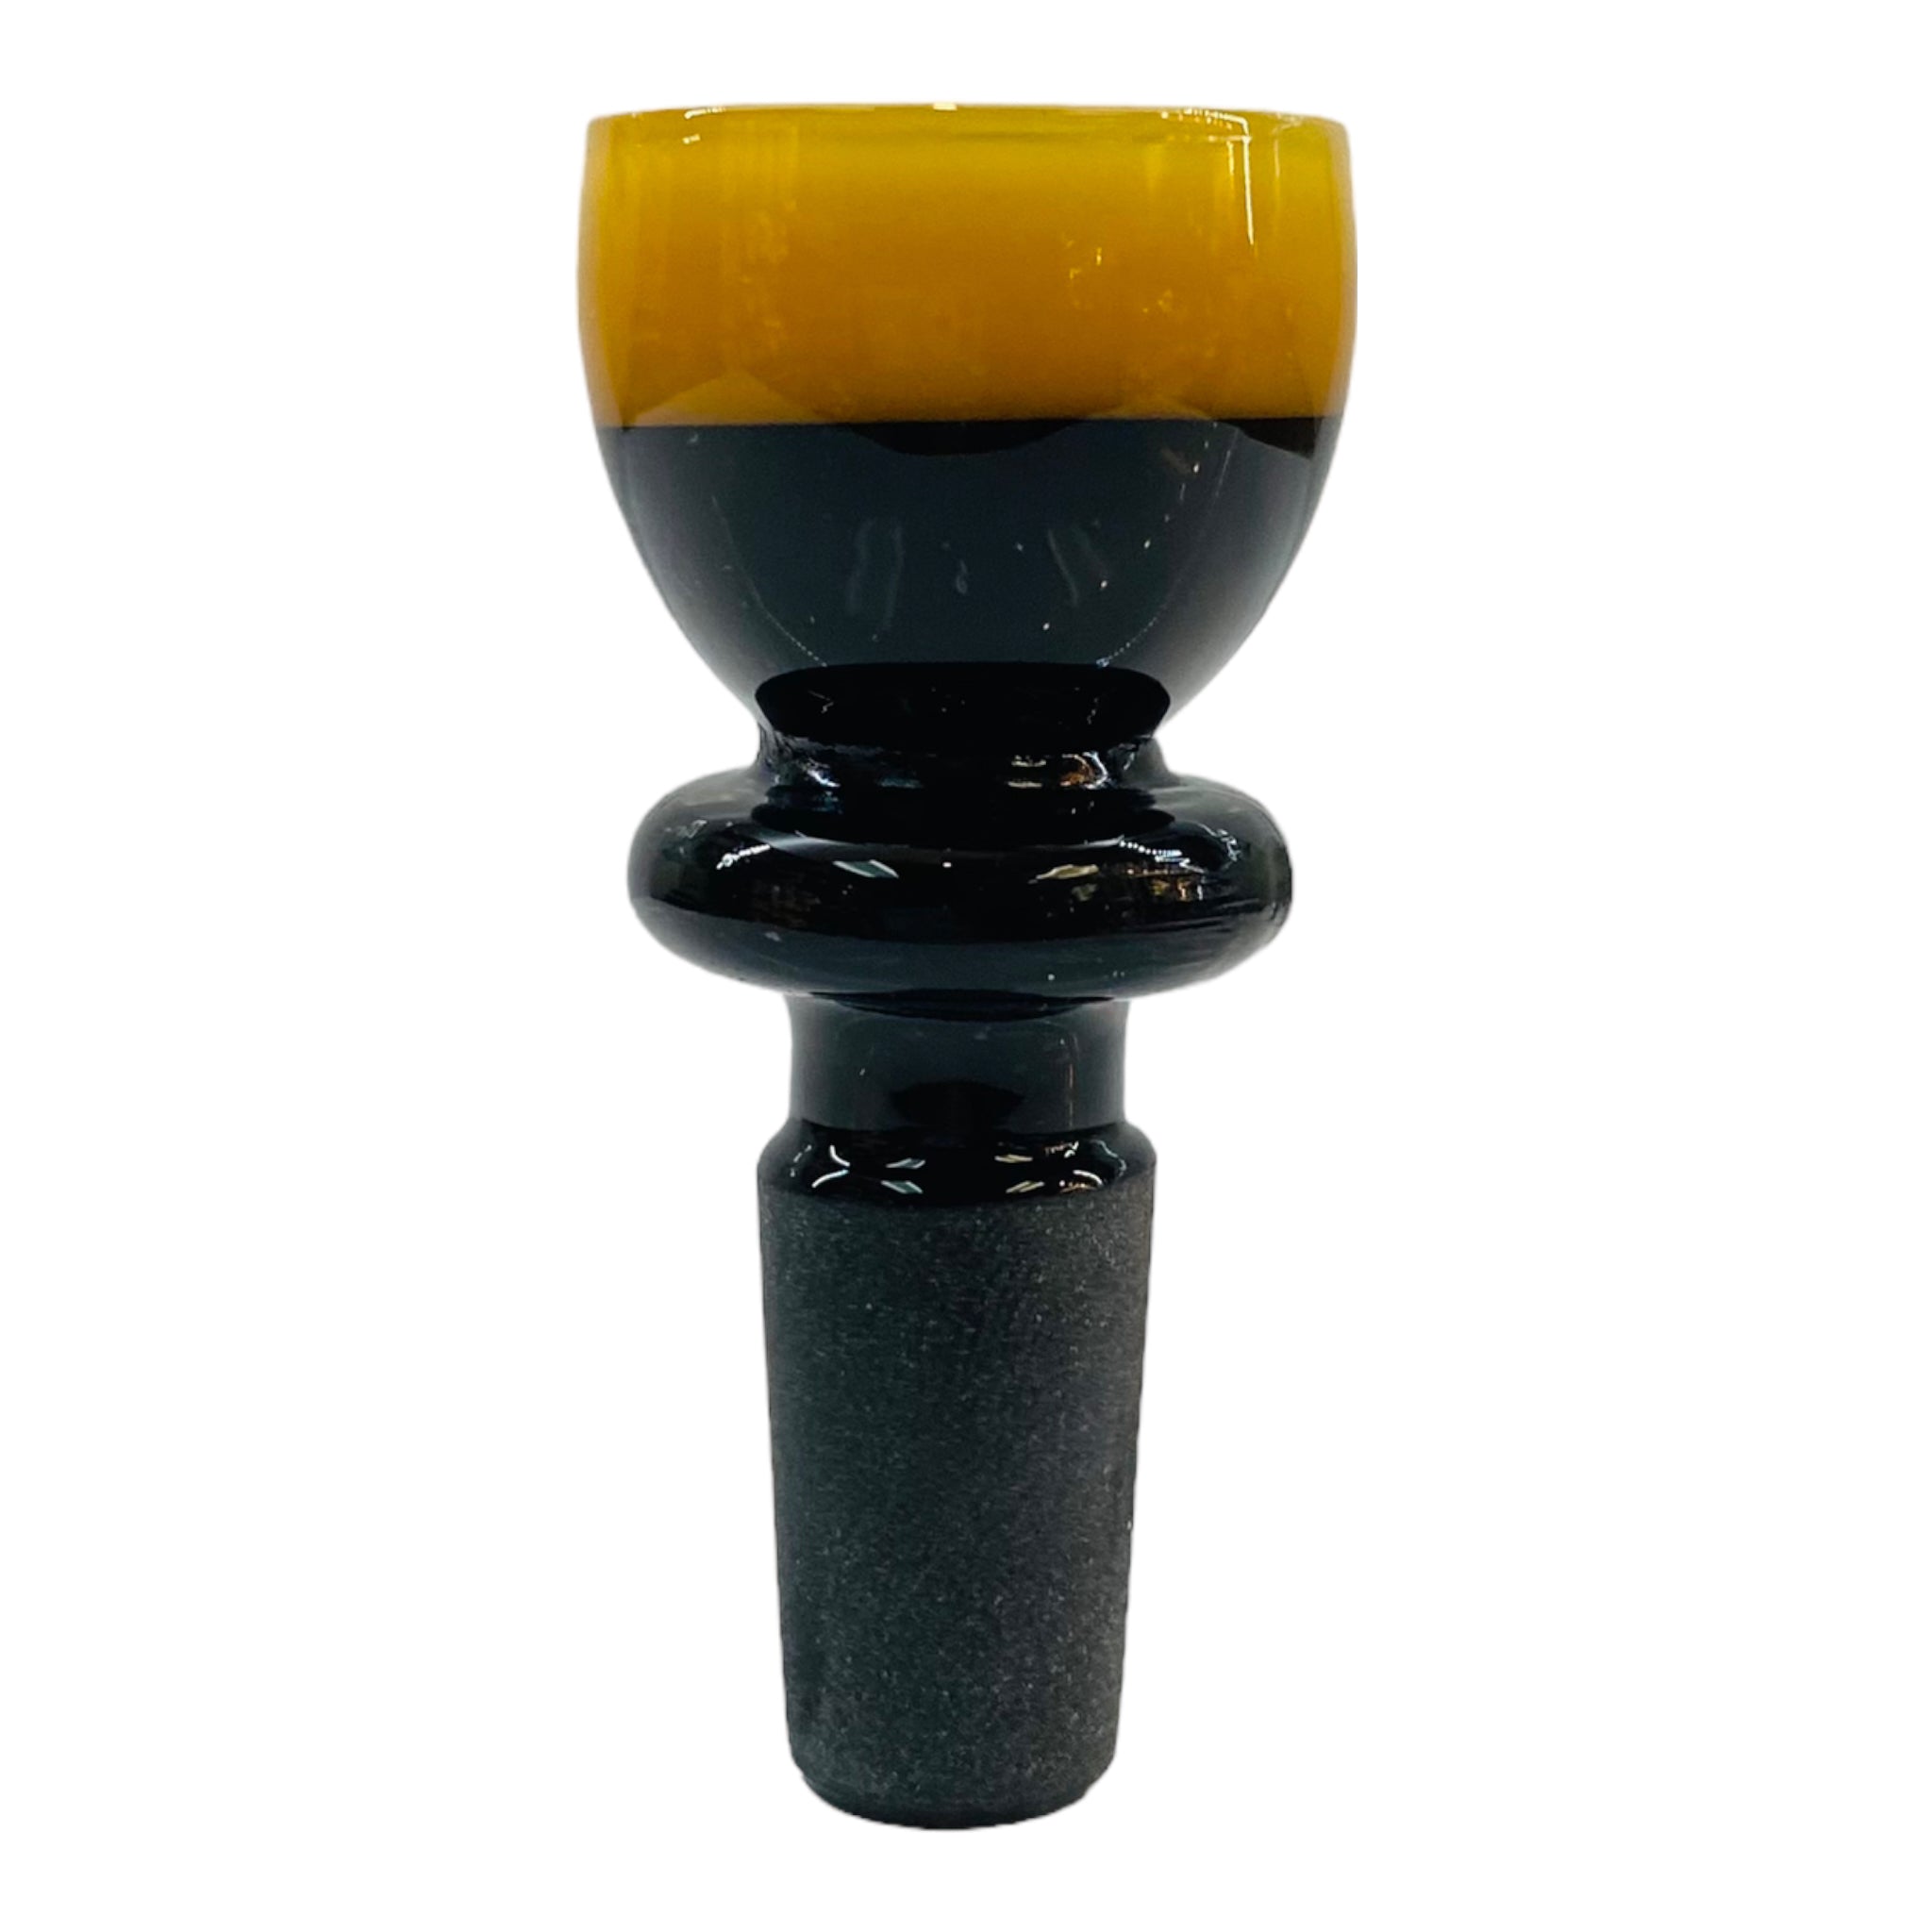 14mm Flower Bowl - Black Fitting With Color Rim - Sunburst Yellow